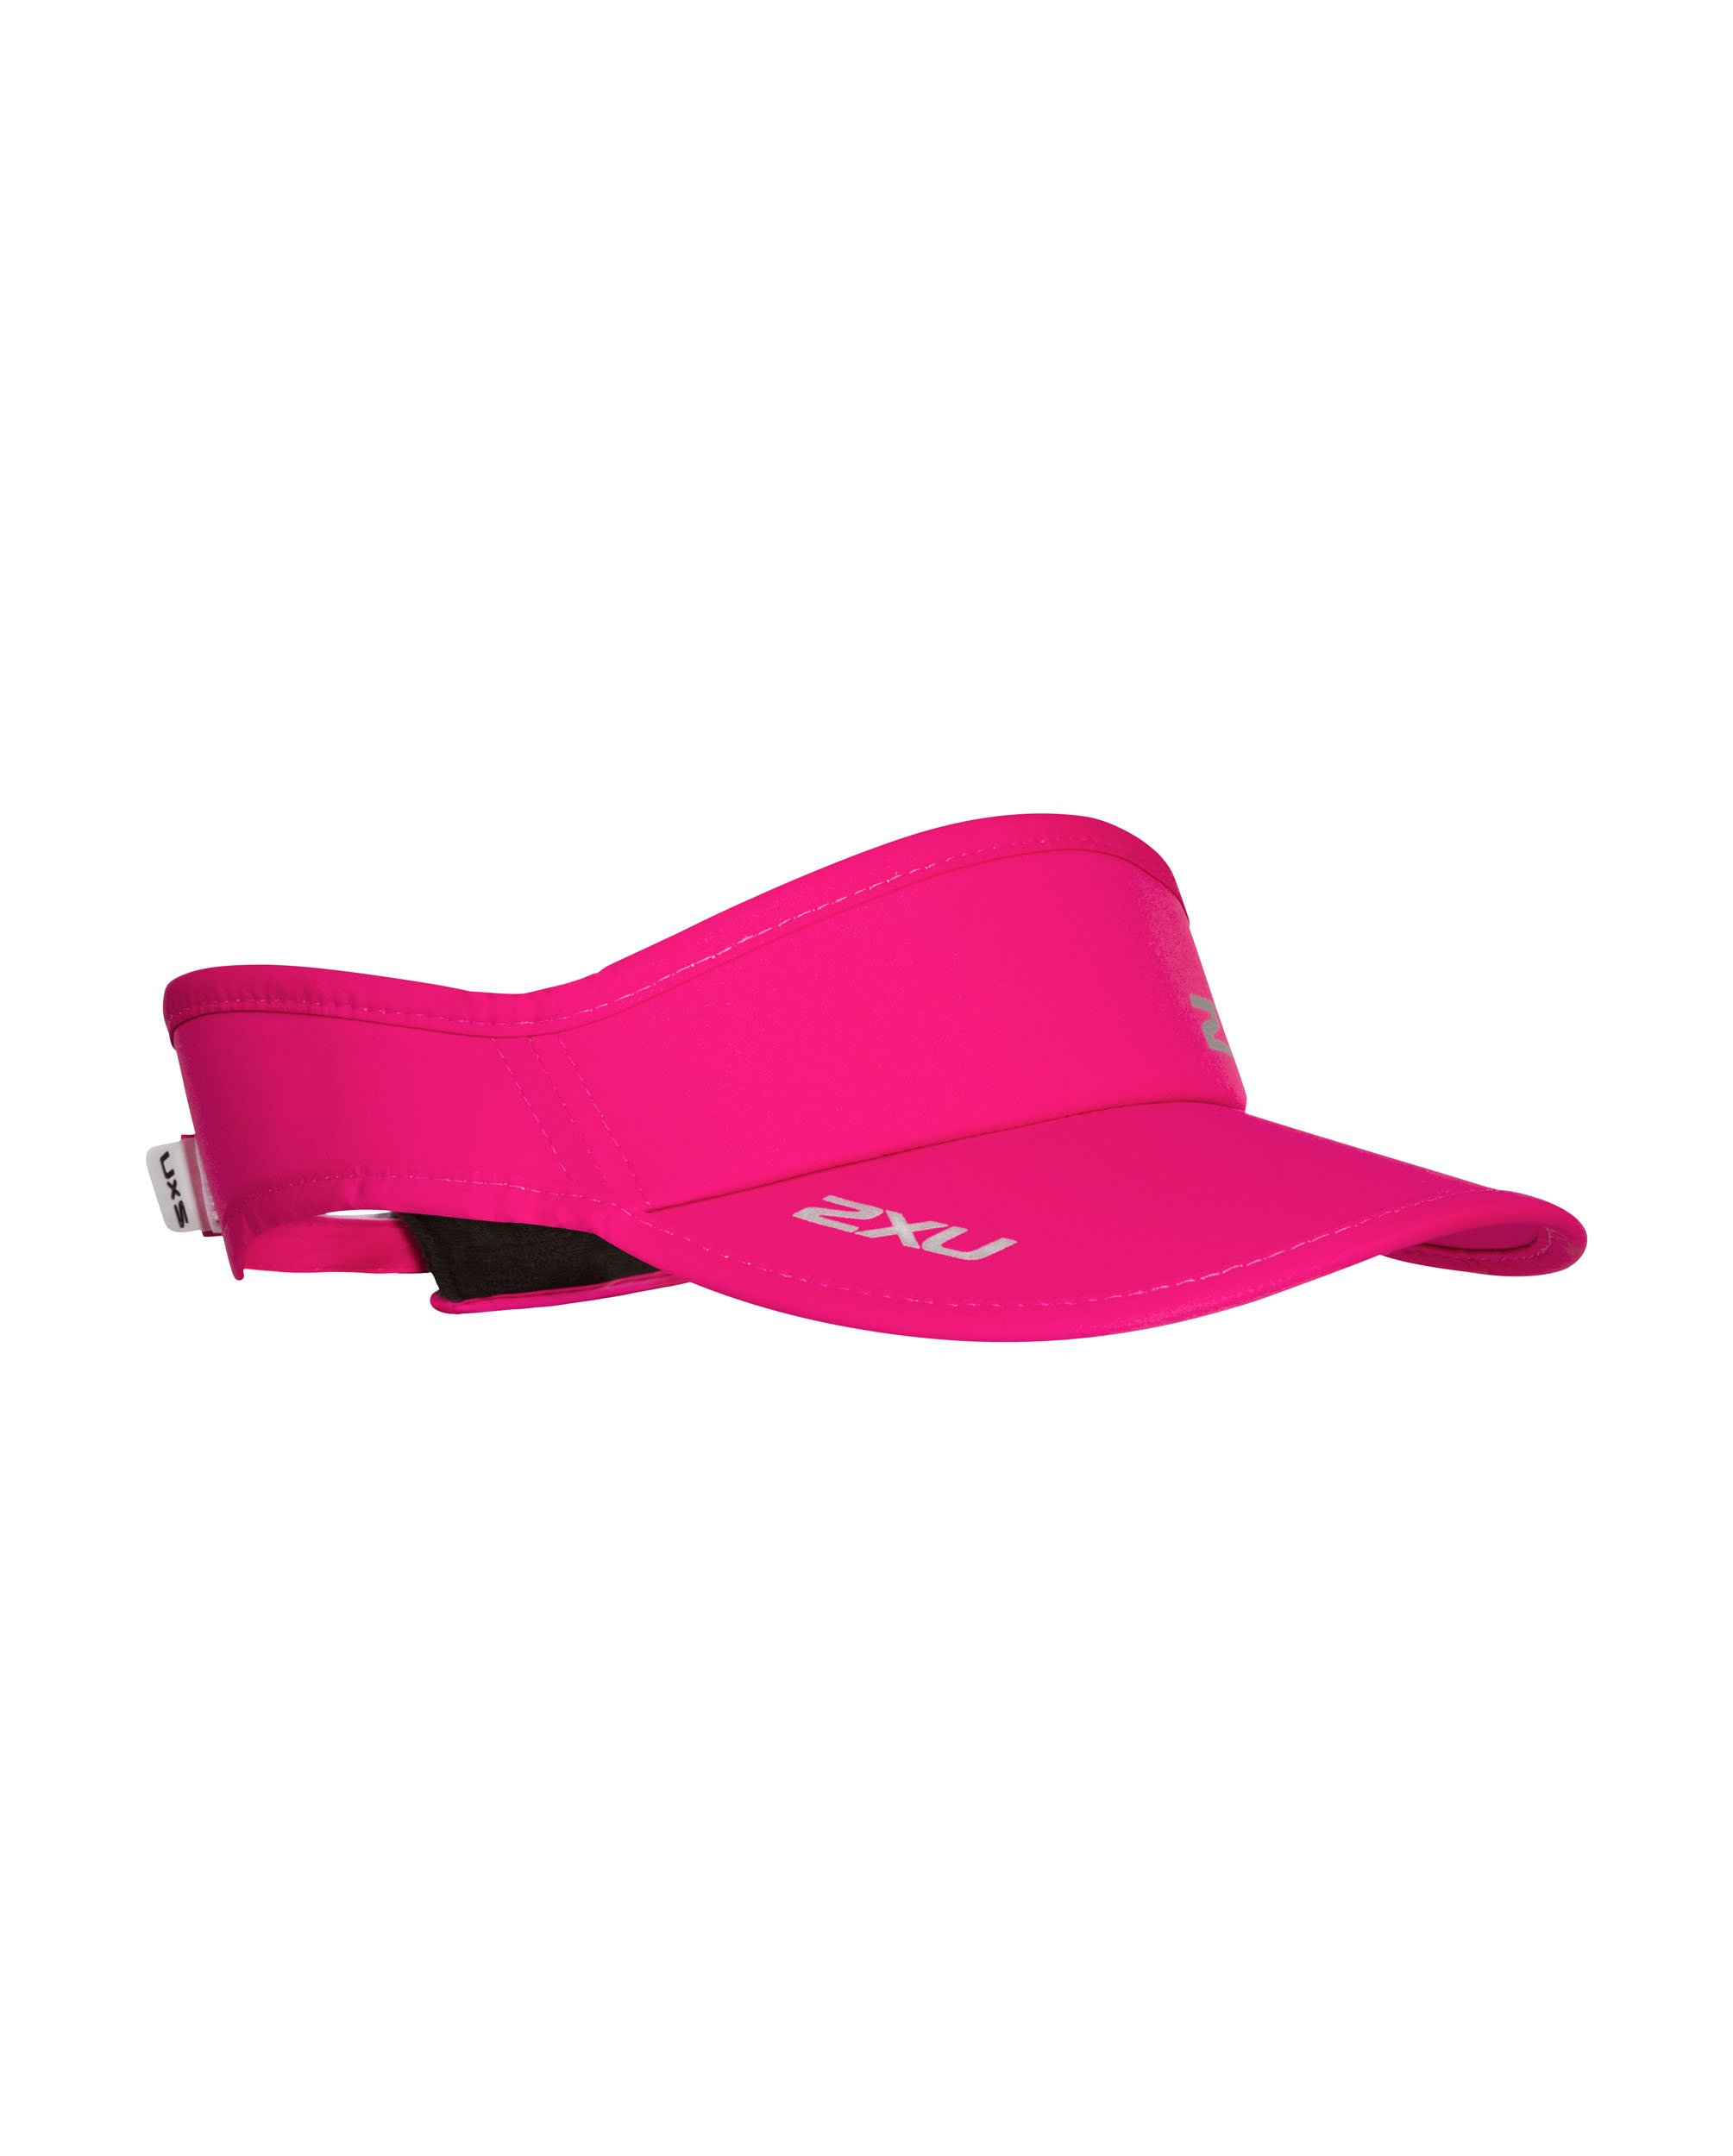 2XU Unisex Run Cap Hat Headwear Pink Sports Running Breathable Lightweight 